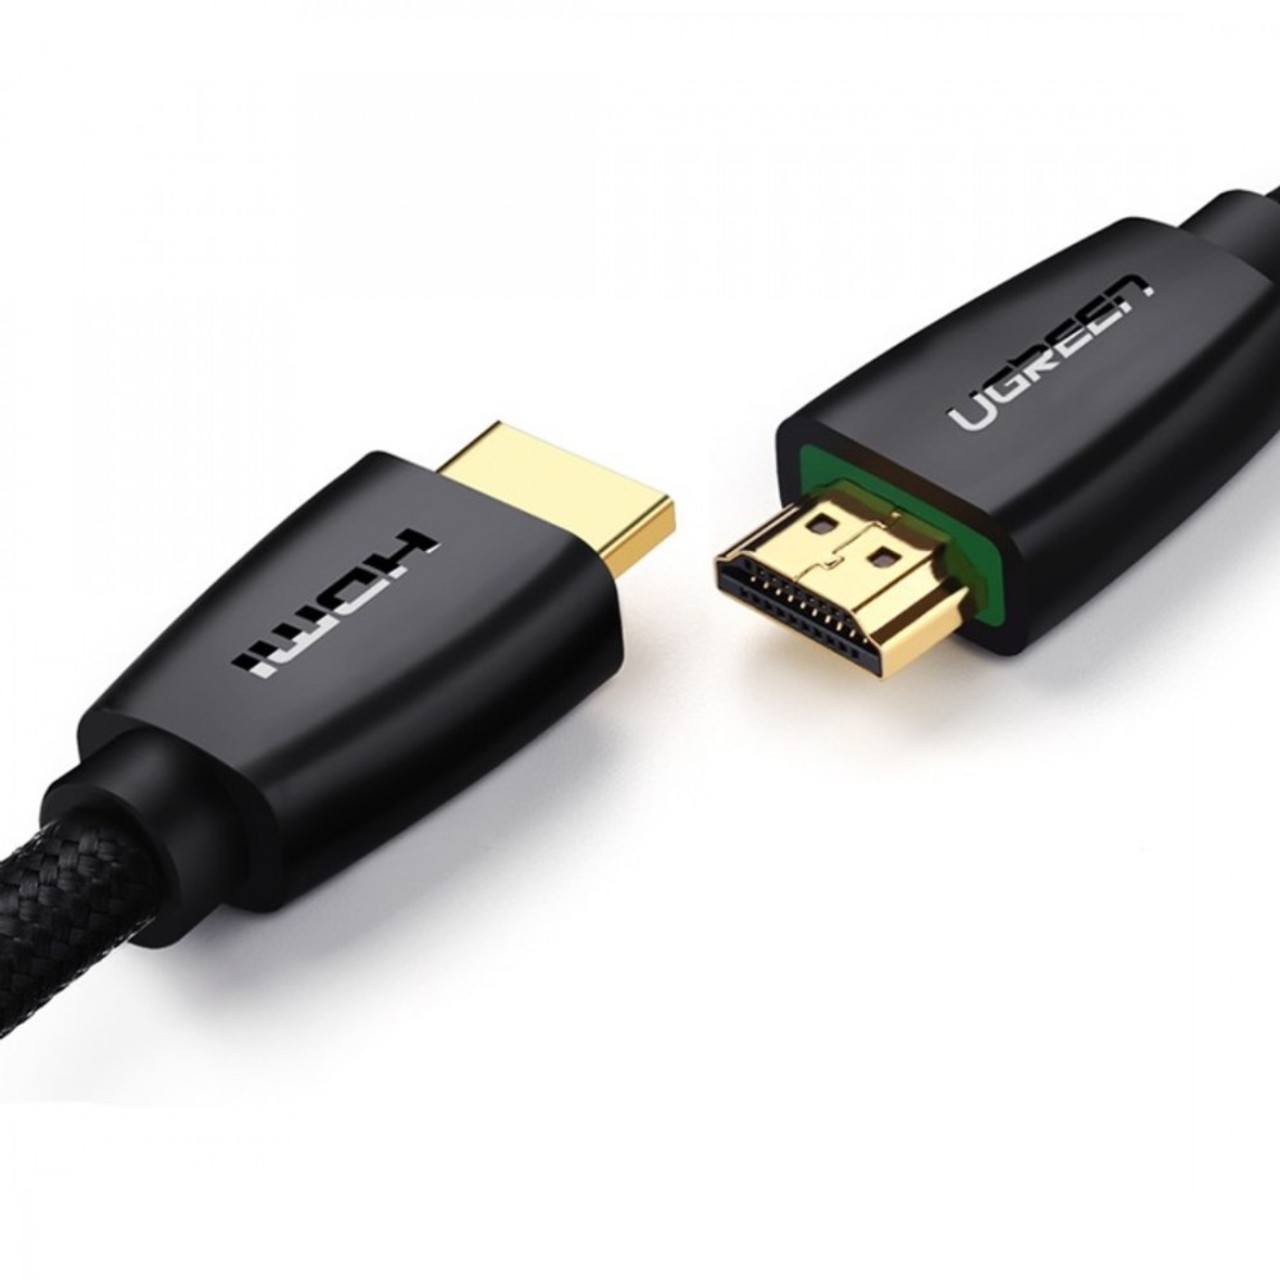 Ugreen Cable HDMI Full Copper 4K 60Hz 3M